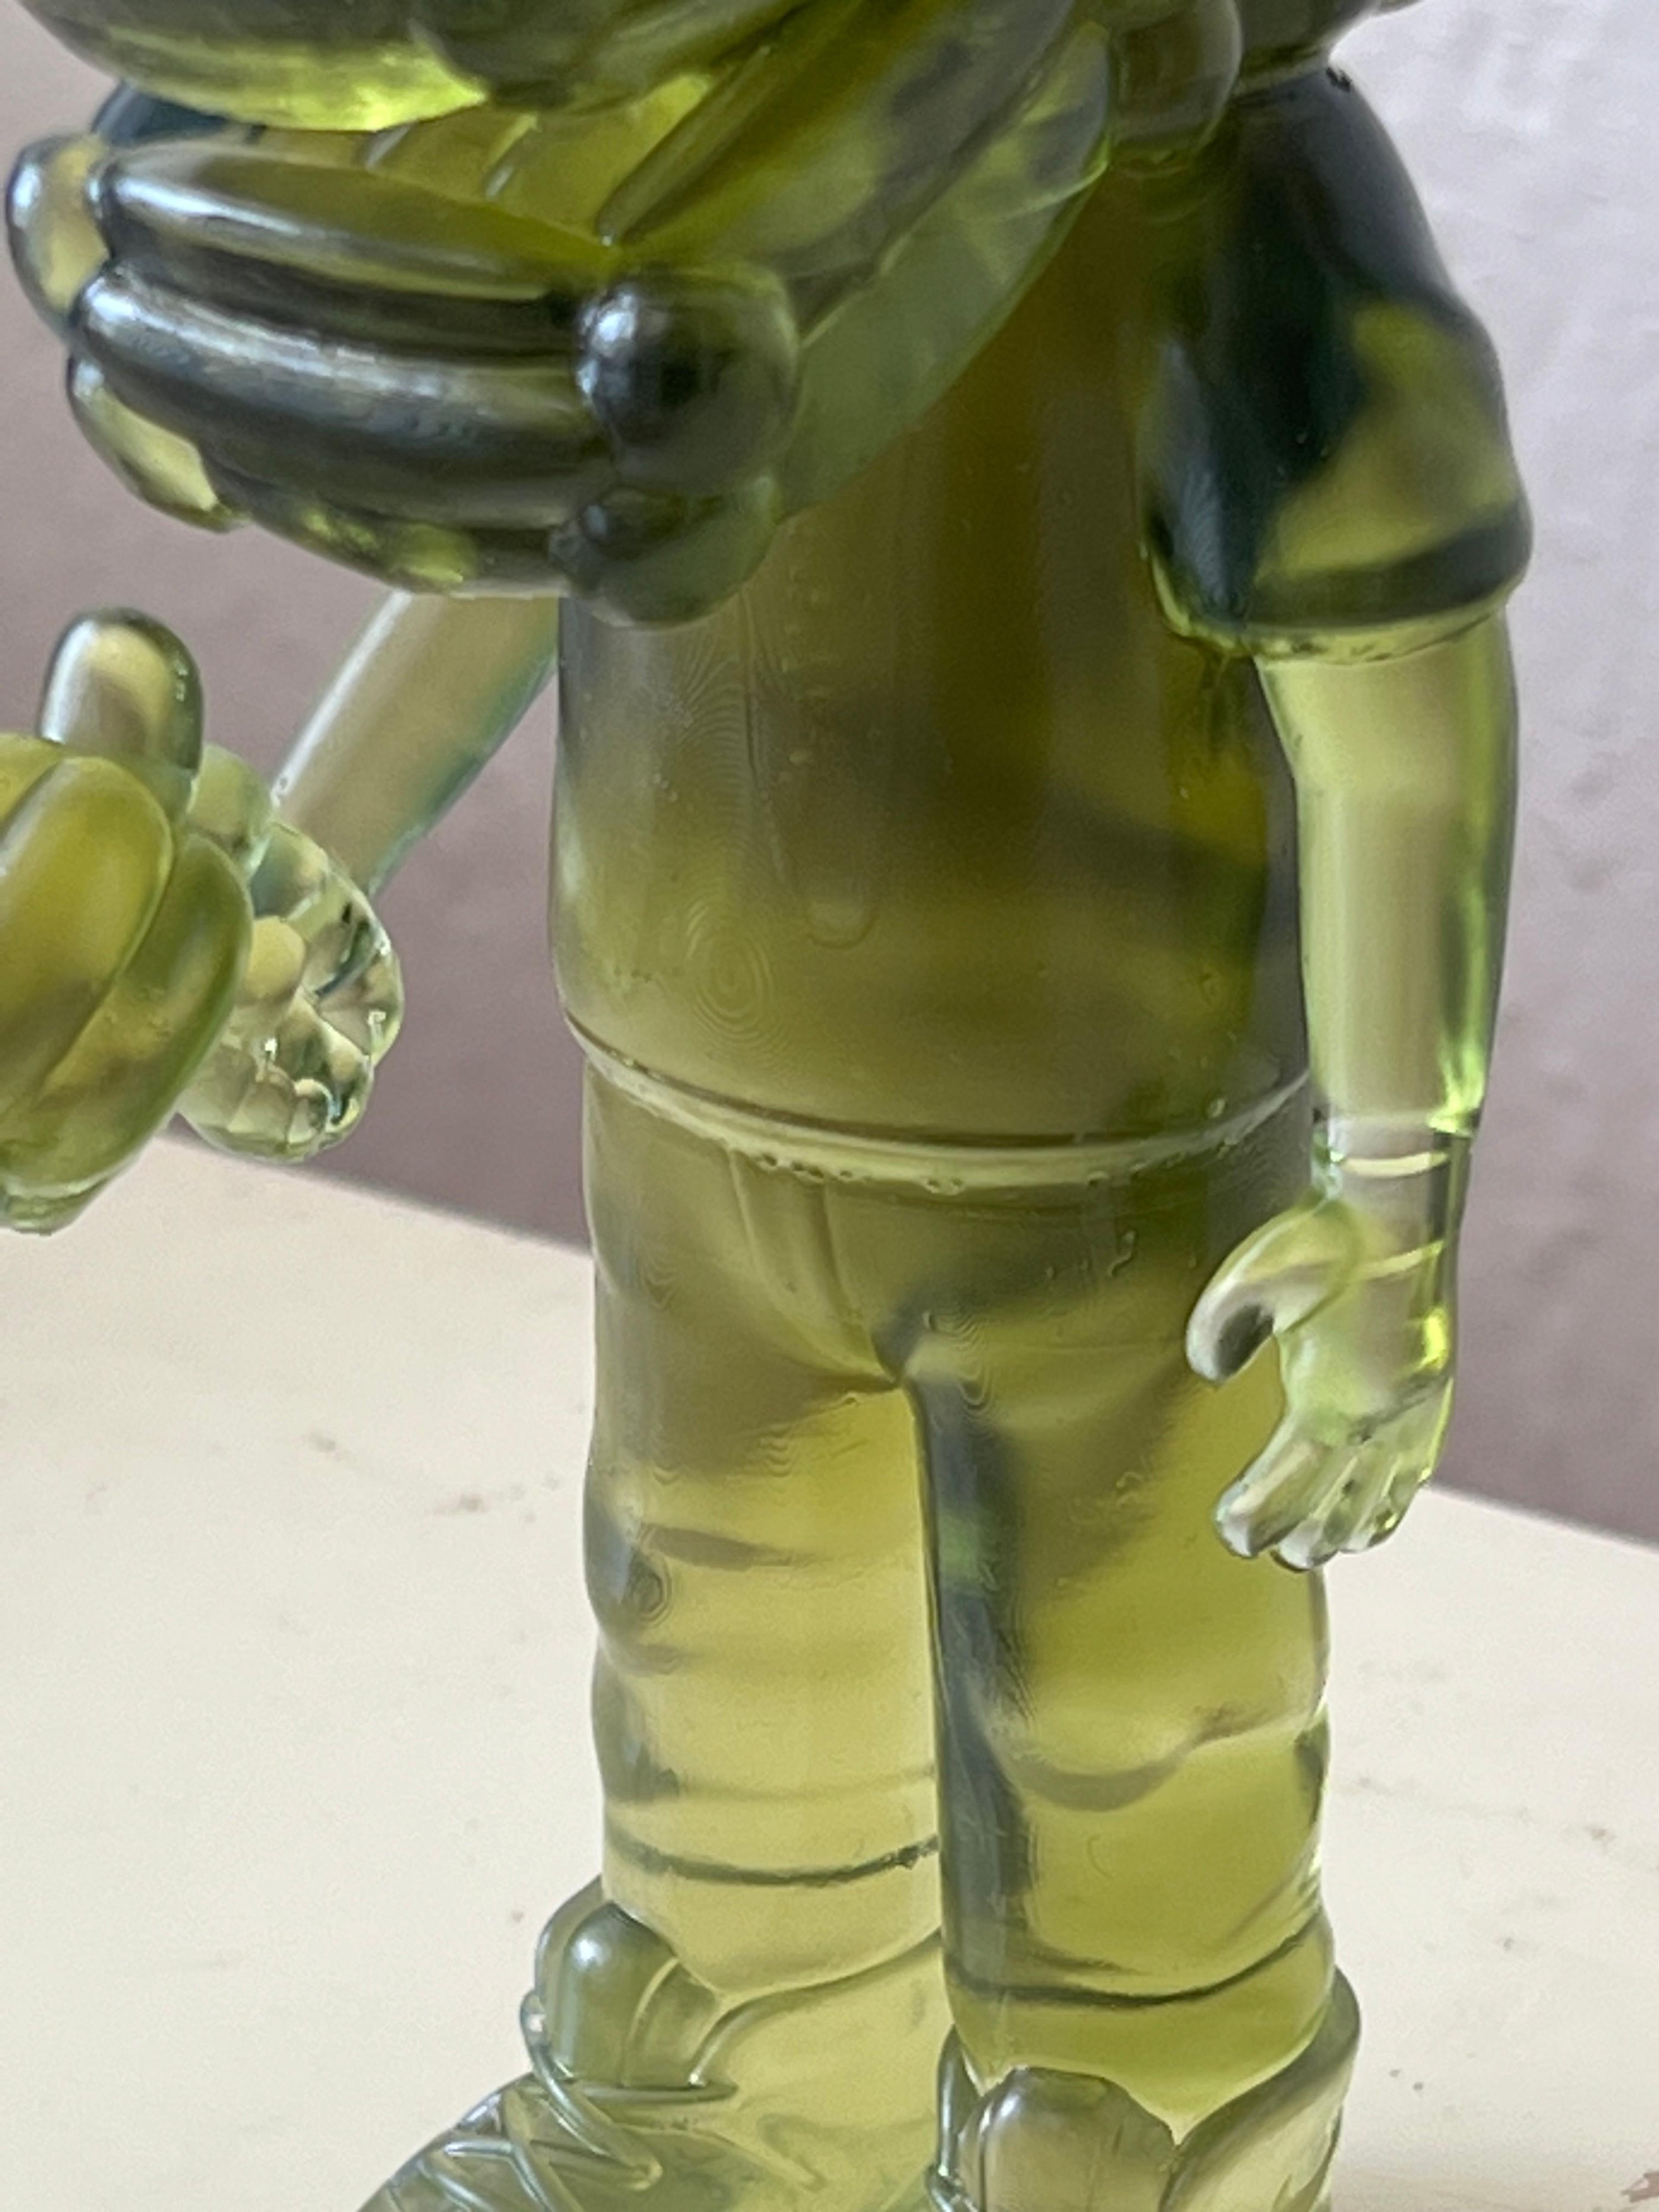 Alternate View 5 of FLorida Man Gator sculpture